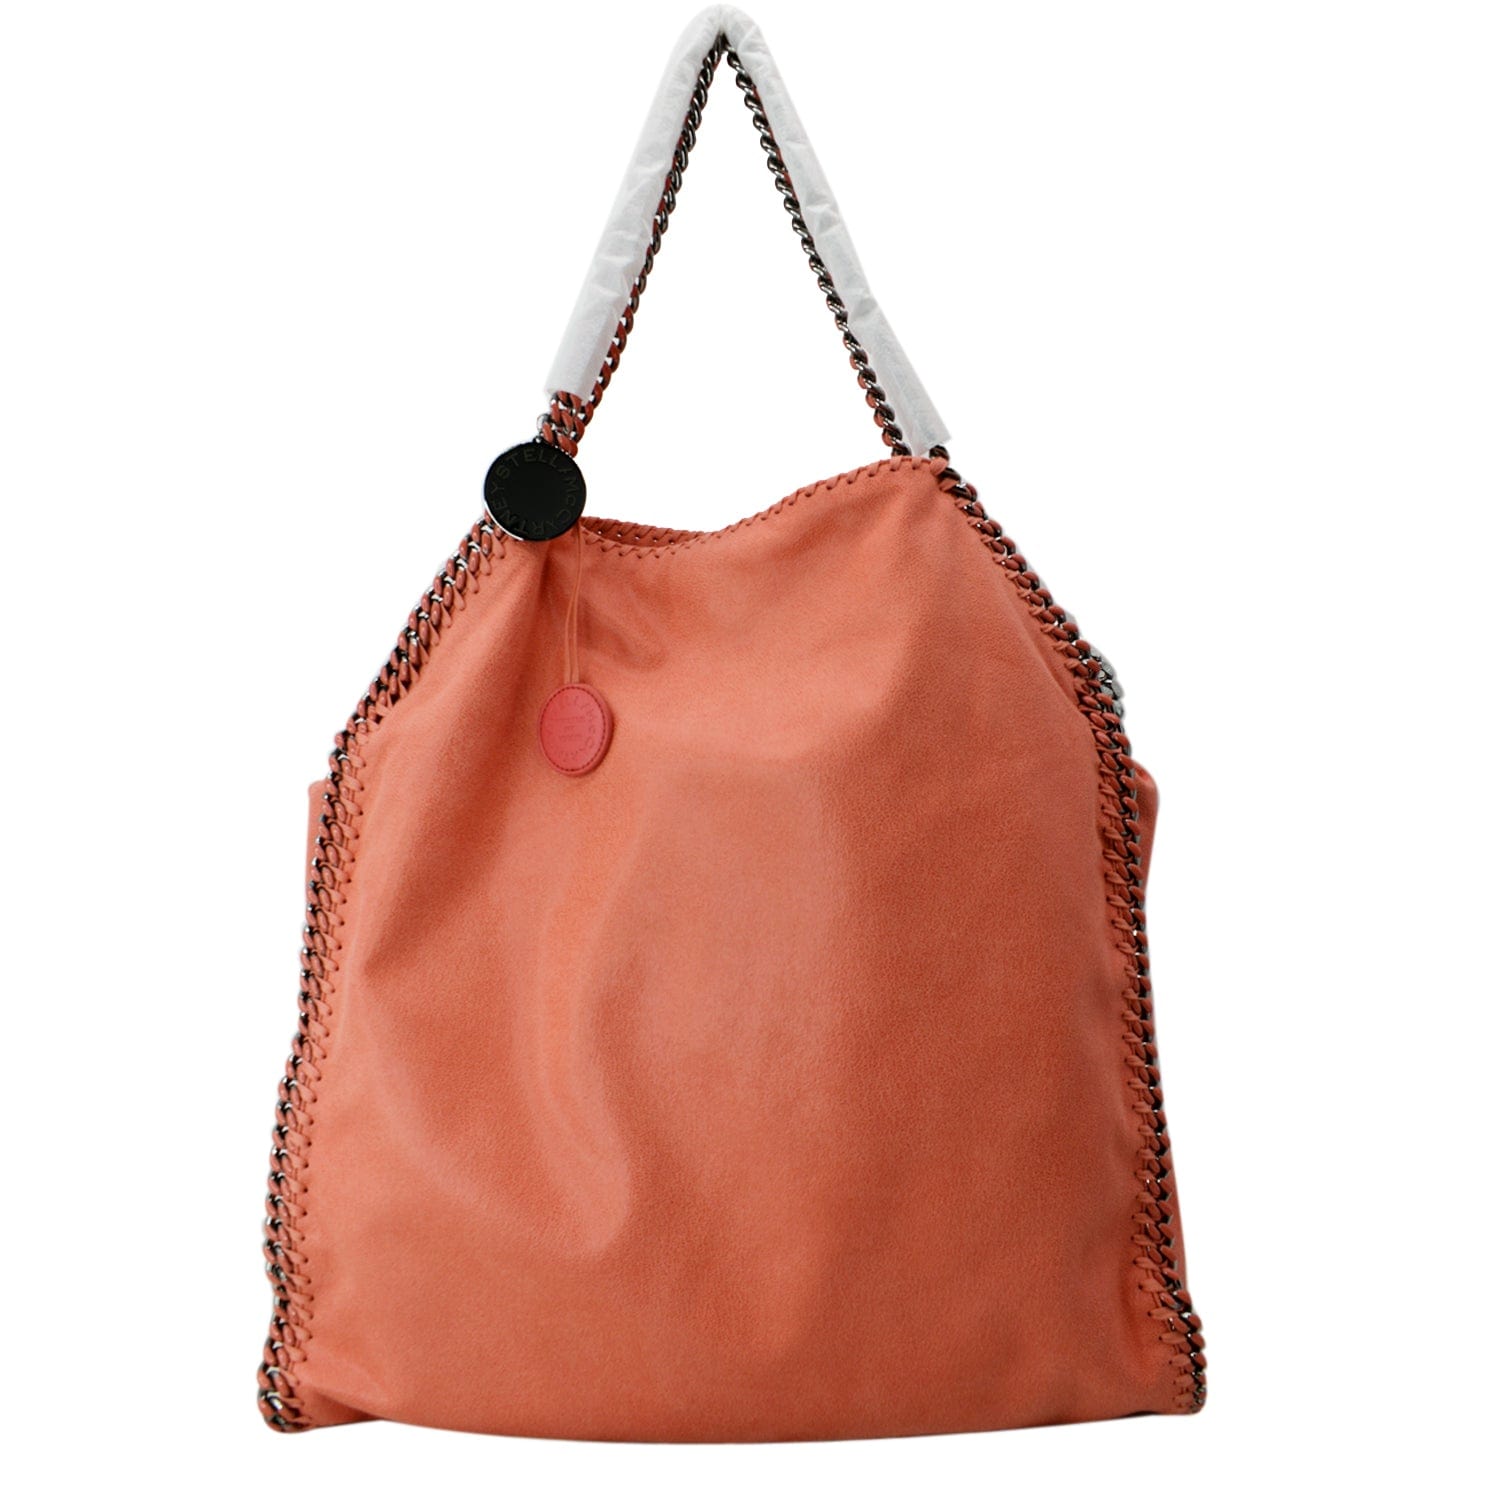 Stella McCartney Leather Hobo Bag - Orange Hobos, Handbags